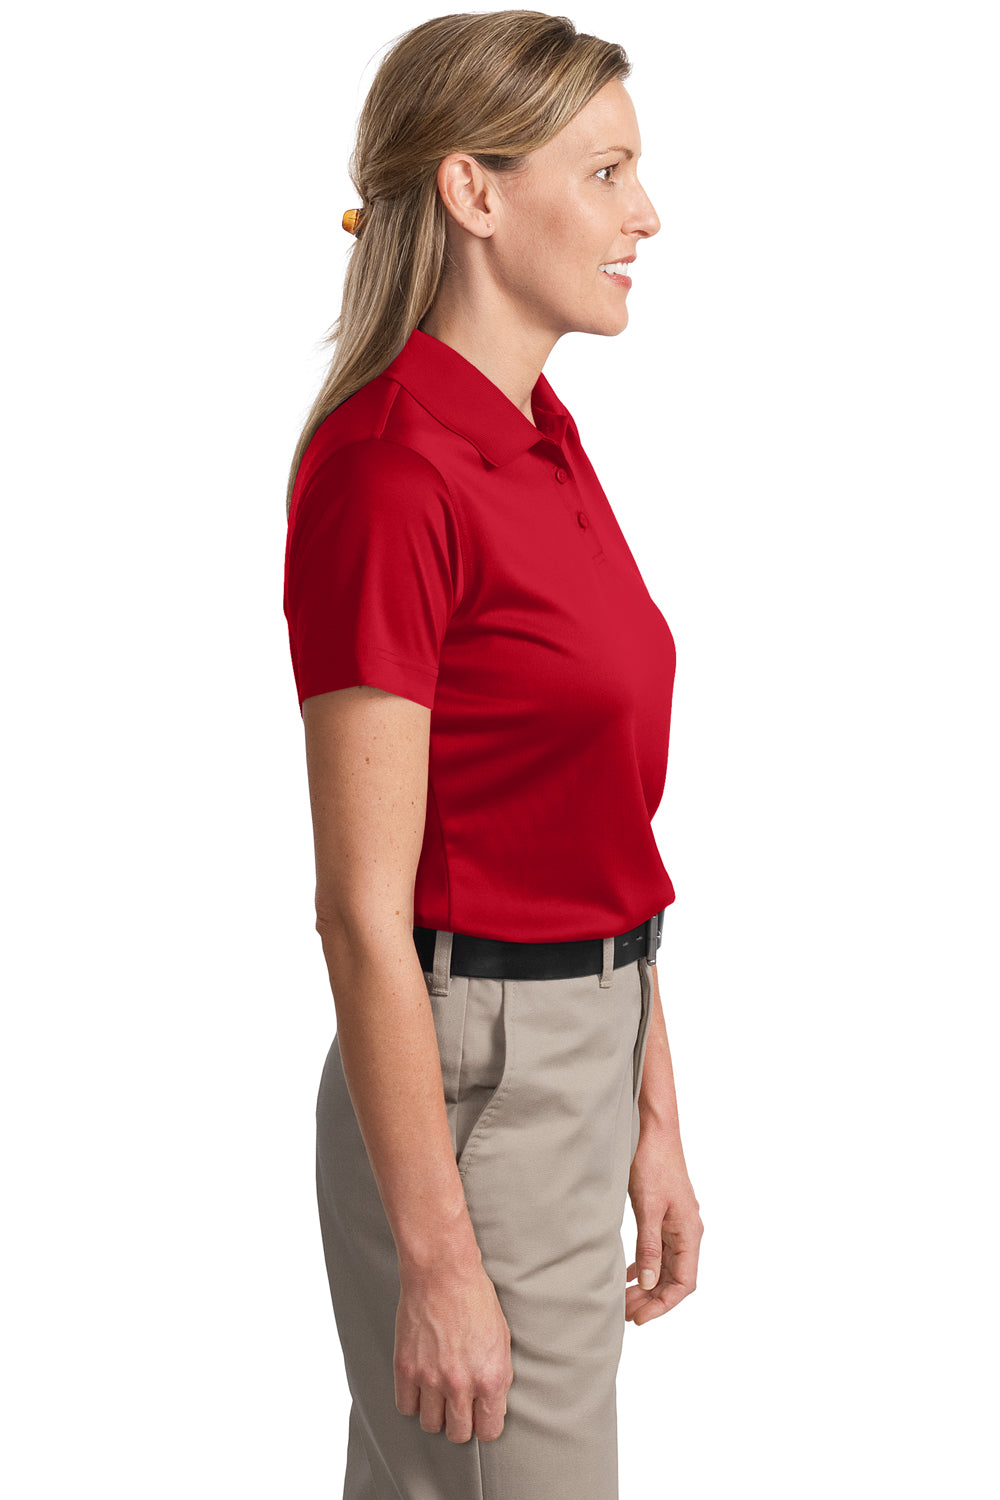 CornerStone CS413 Womens Select Moisture Wicking Short Sleeve Polo Shirt Red Side